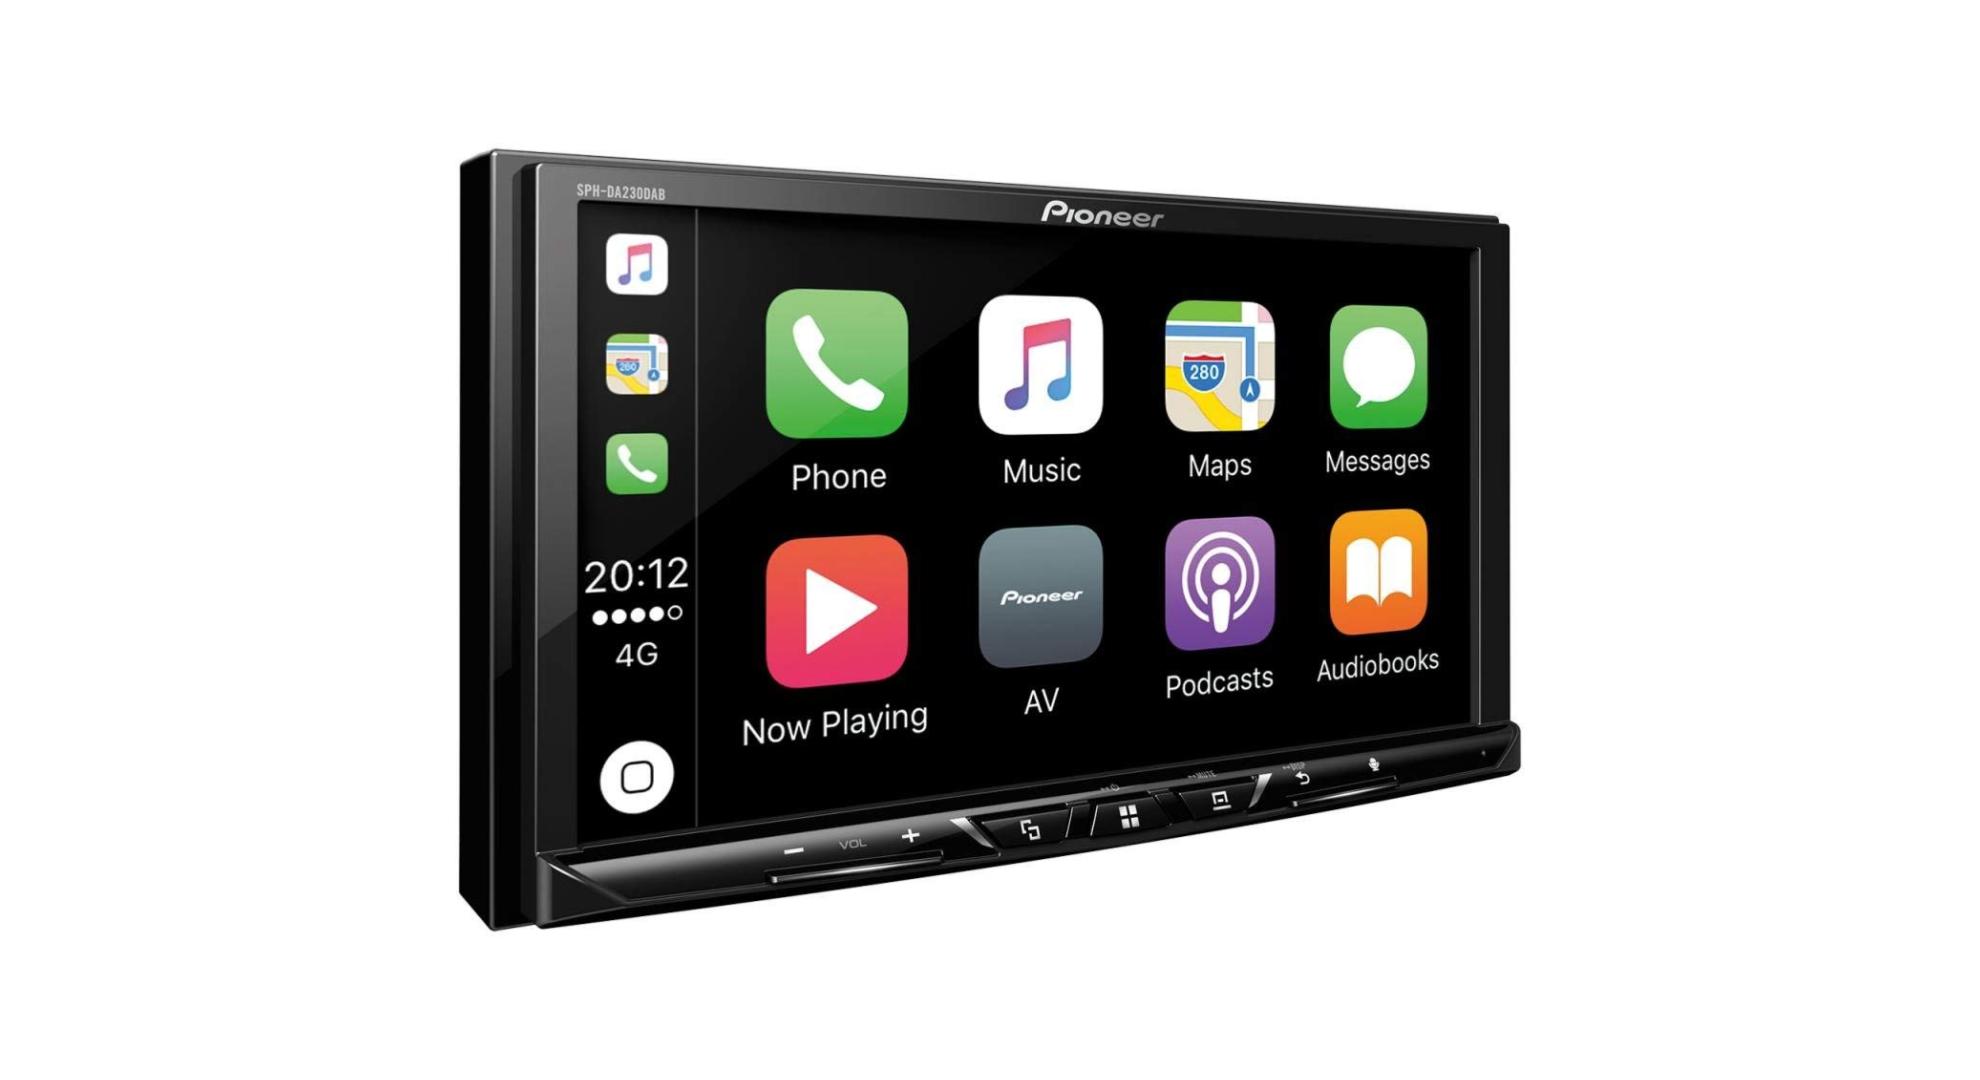 CARPURIDE Wireless CarPlay Android Auto Autoradio 7 HD écran Tactile sans Fil Car Stereo Autoradio avec Navigateur GPS/Bluetooth 5.0/caméra de recul/FM/USB/Lien miroir/SiriusXM/SD-32GB 